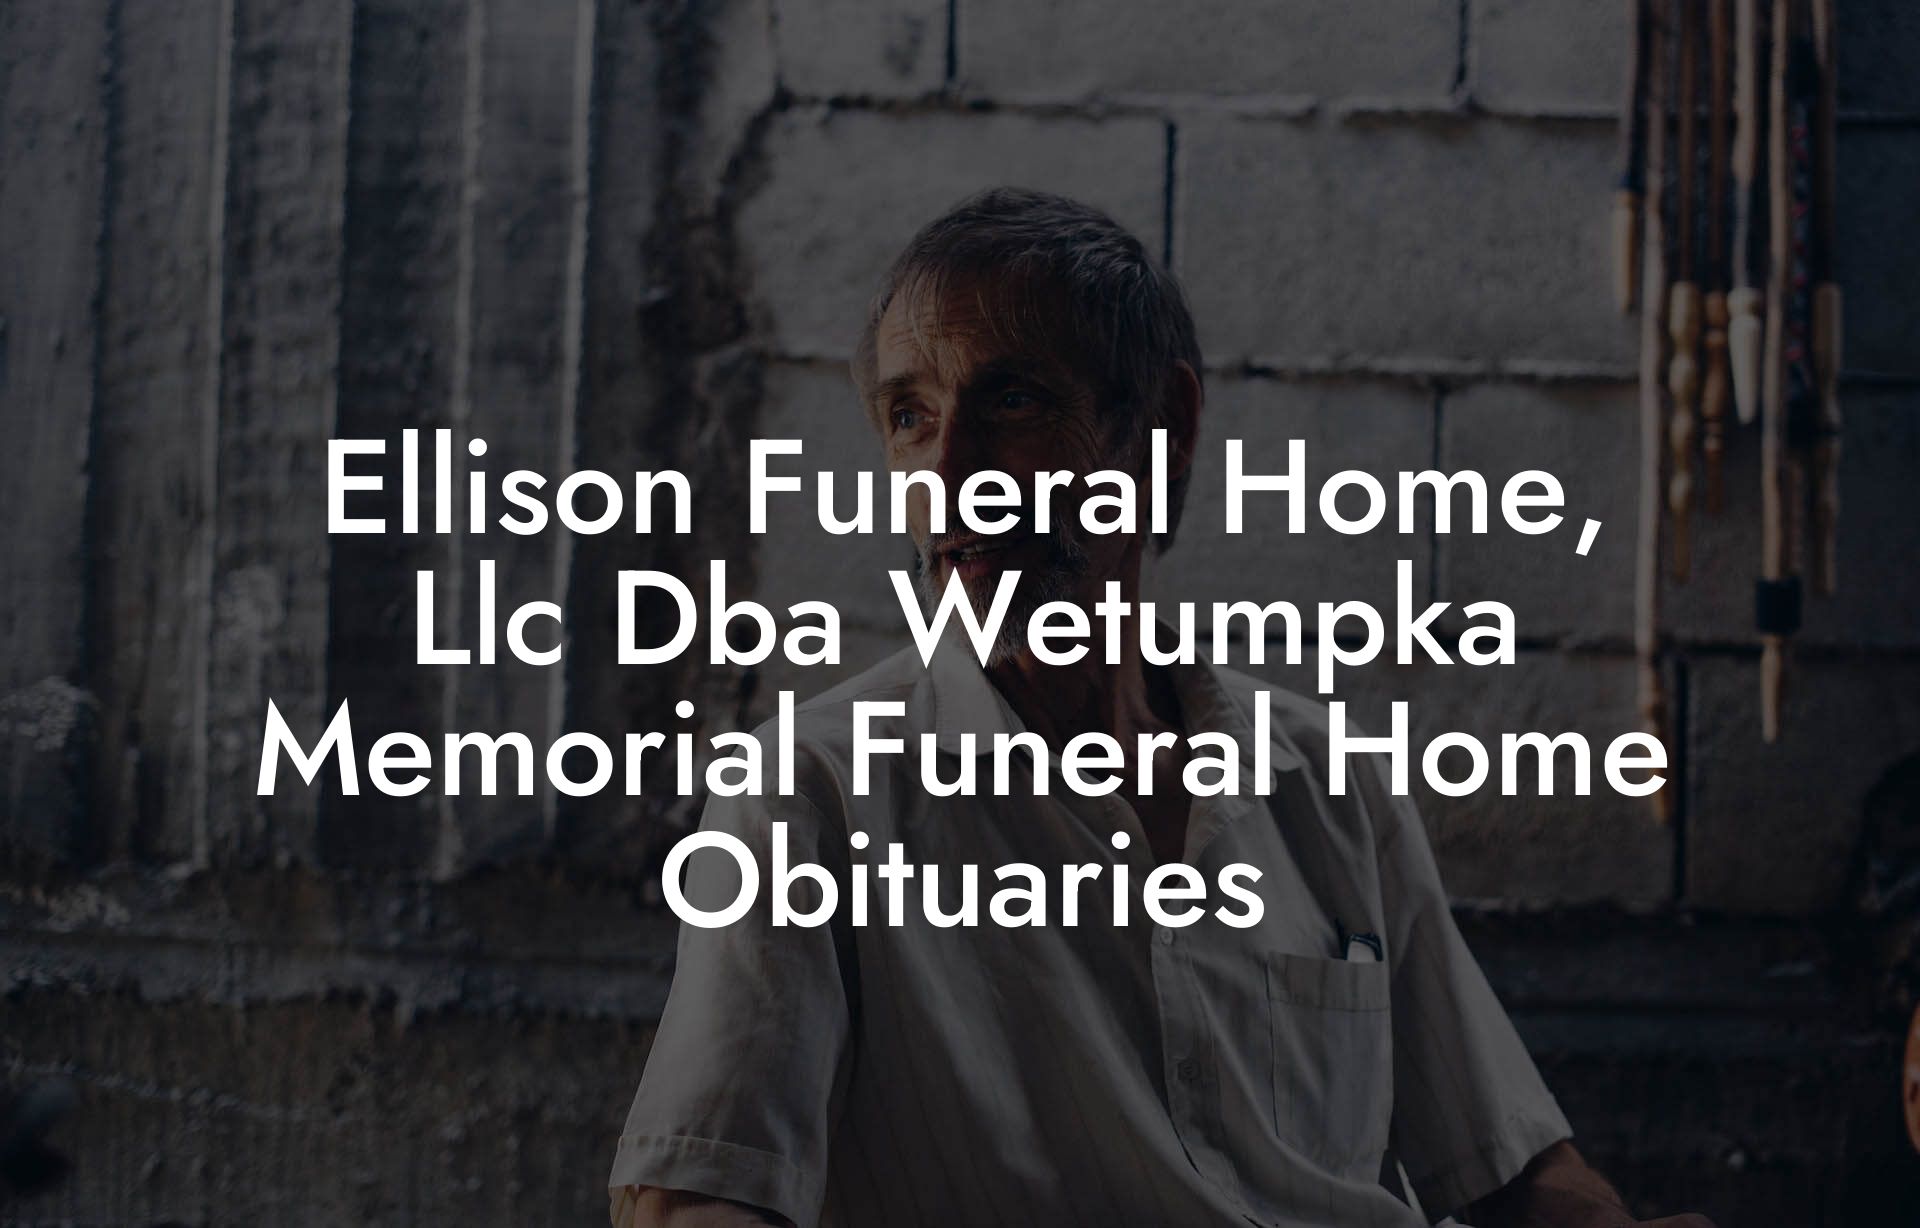 Ellison Funeral Home, Llc Dba Wetumpka Memorial Funeral Home Obituaries